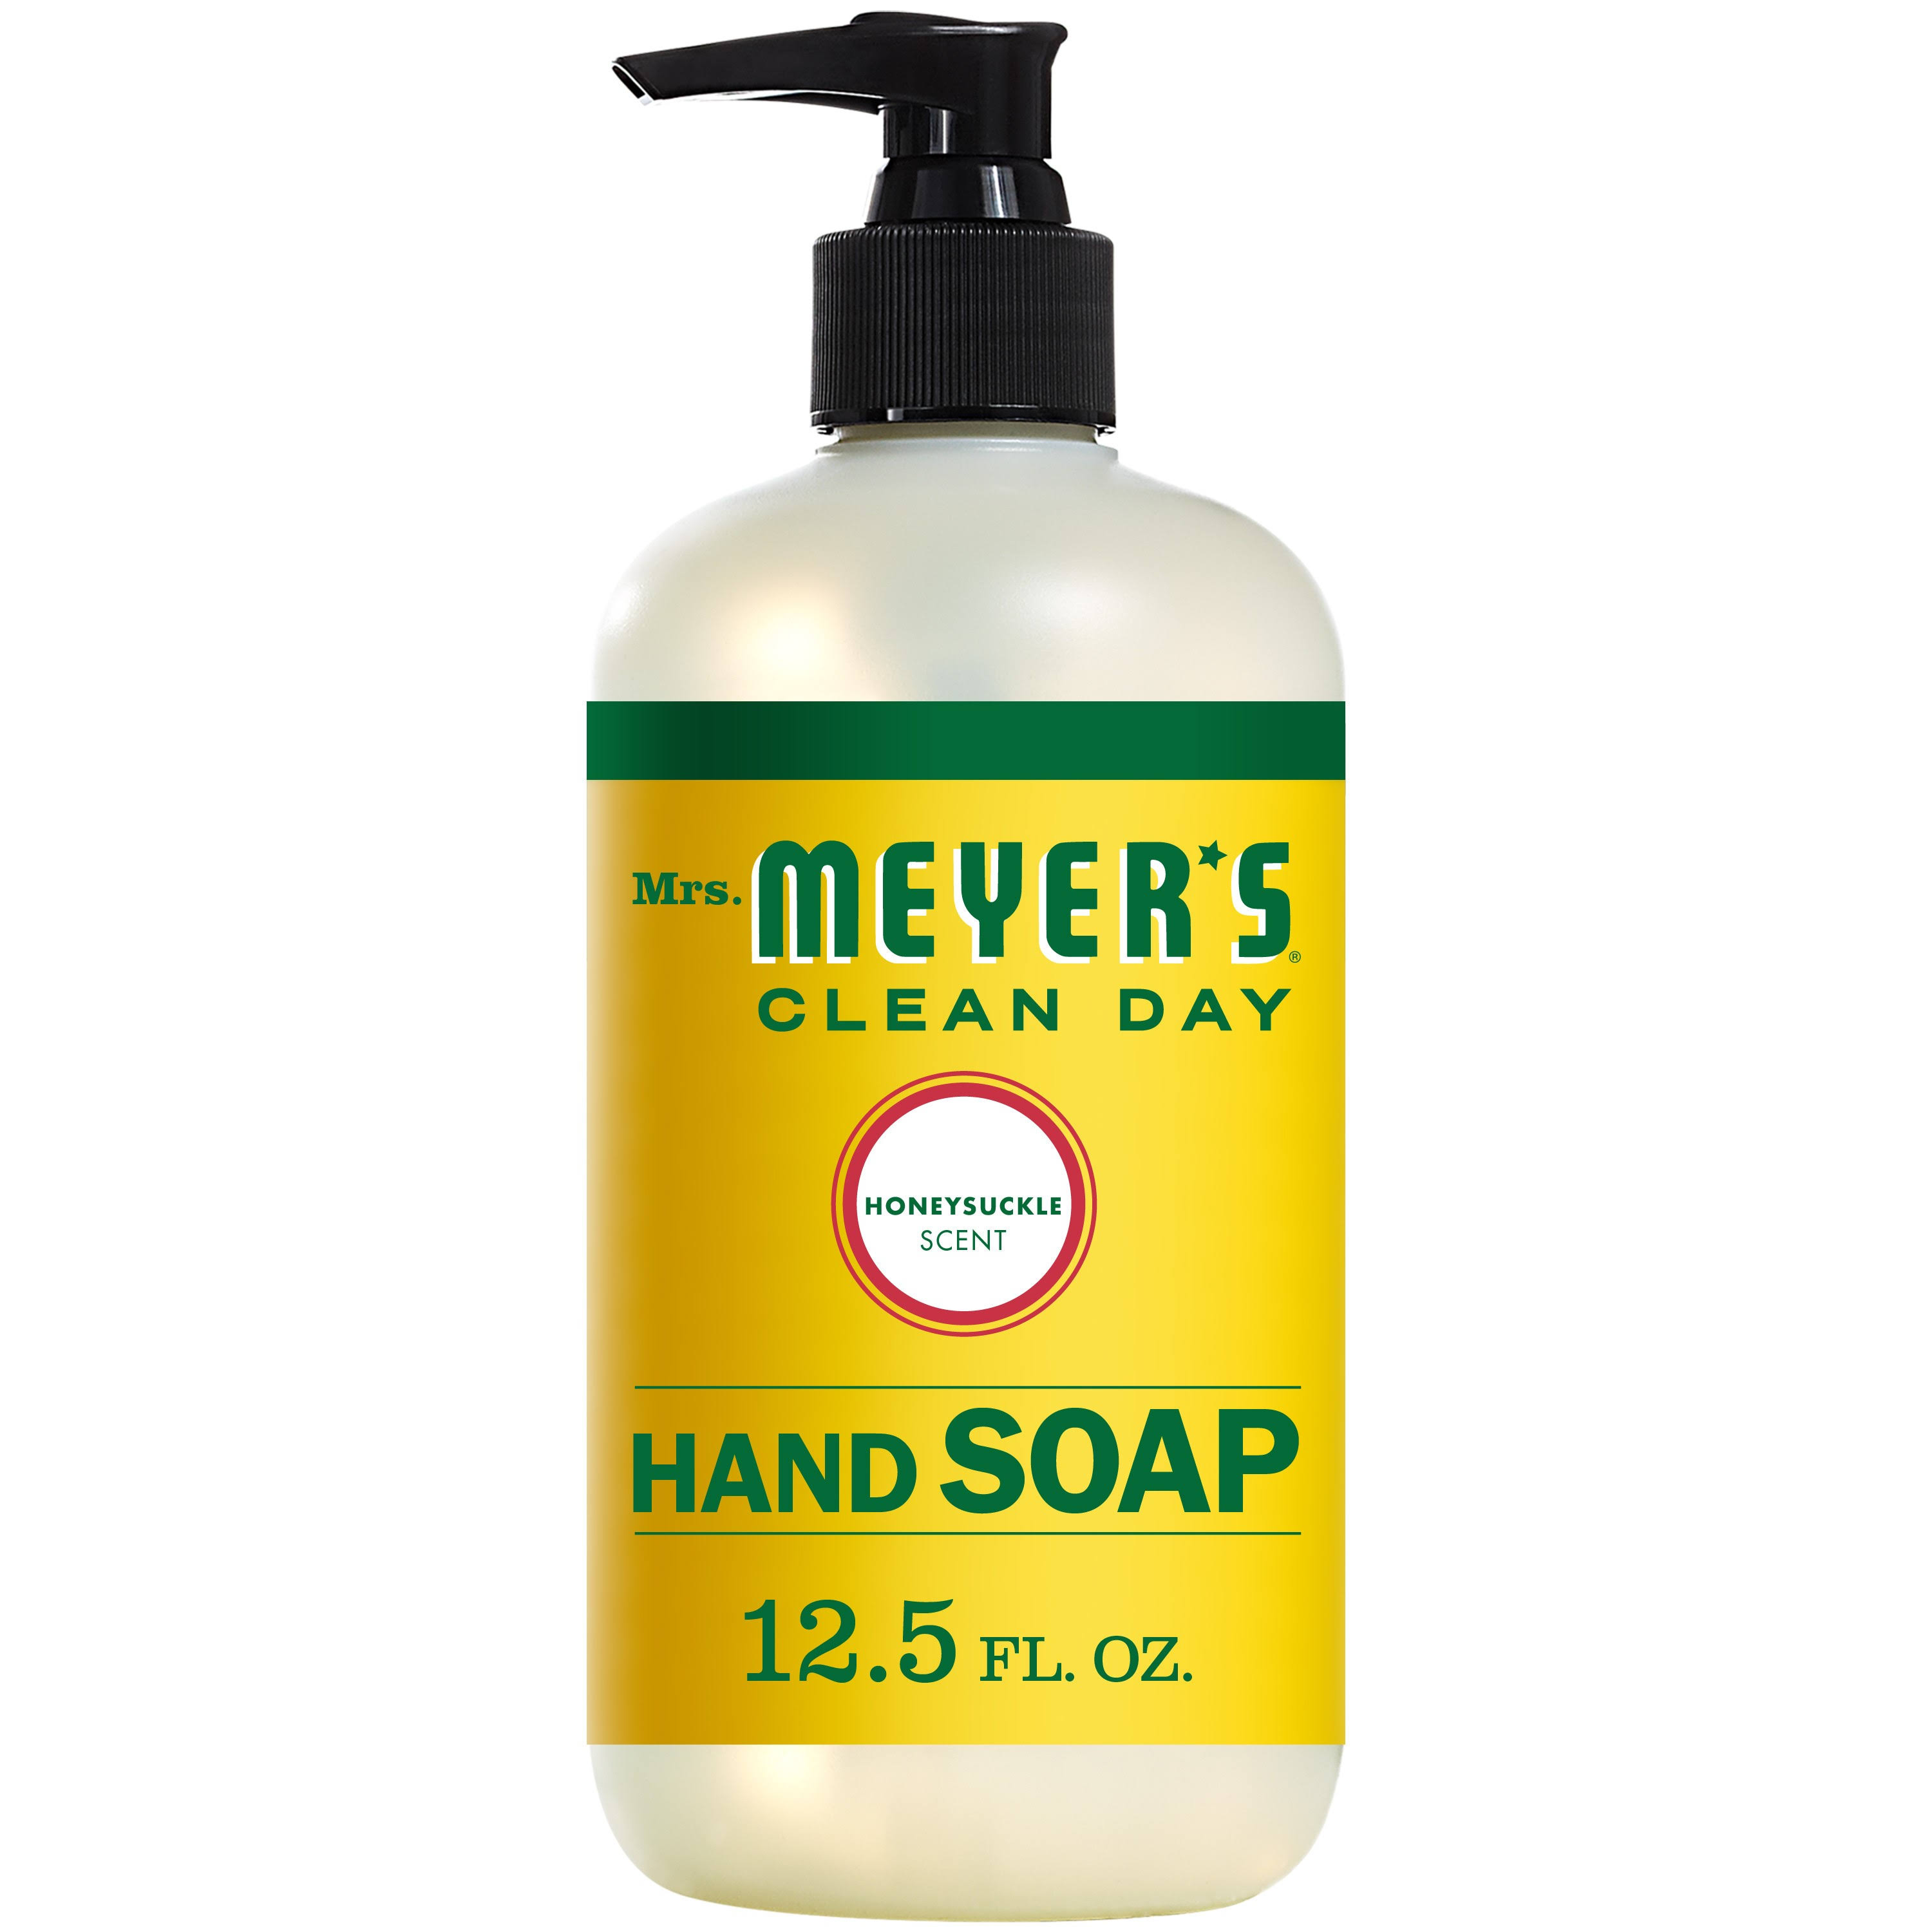 Mrs. Meyers Clean Day Liquid Hand Soap - Honeysuckle - 12.5 FL oz